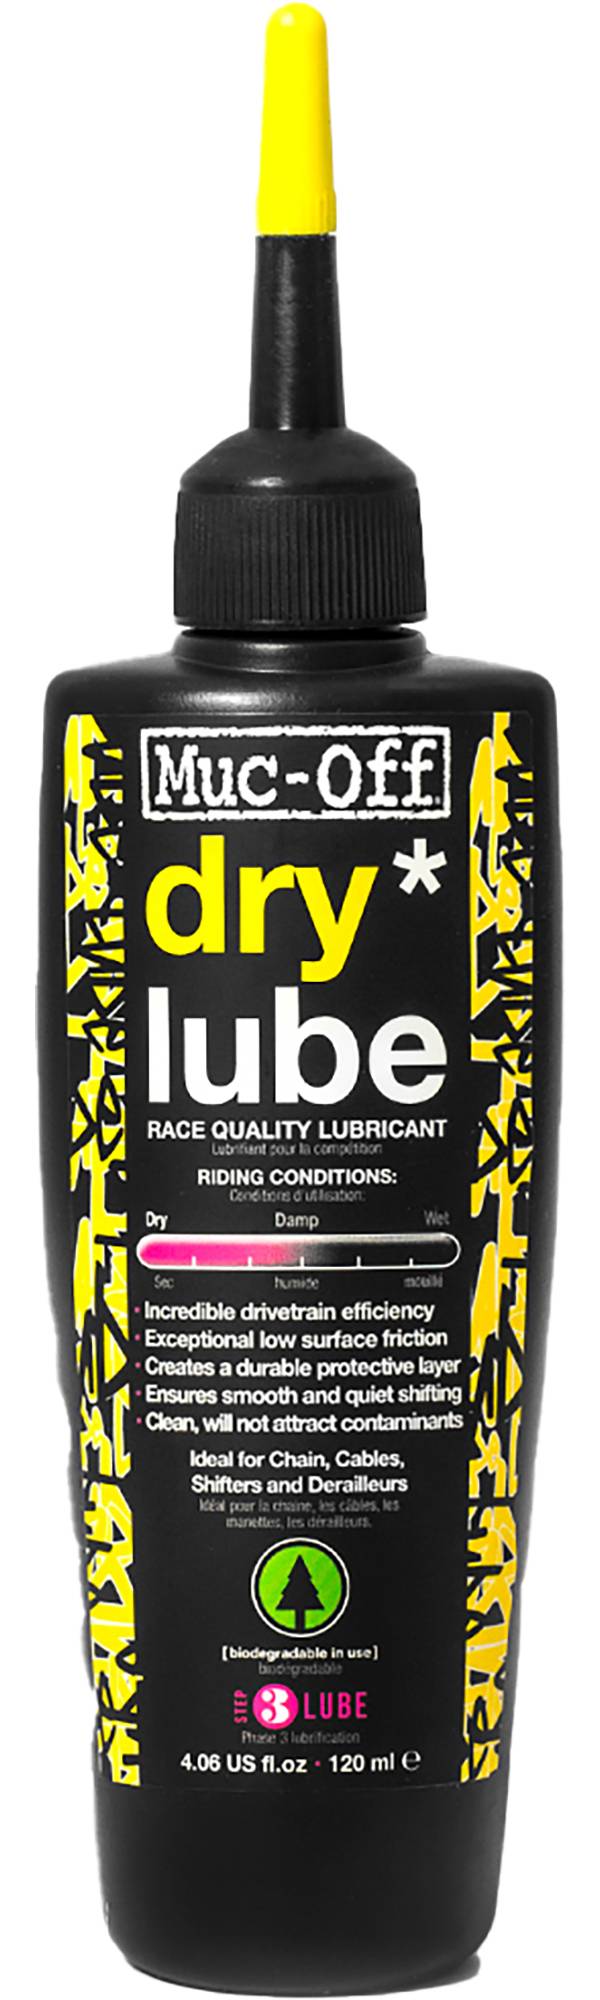 Muc-Off Bio Dry Lube- 120ml product image